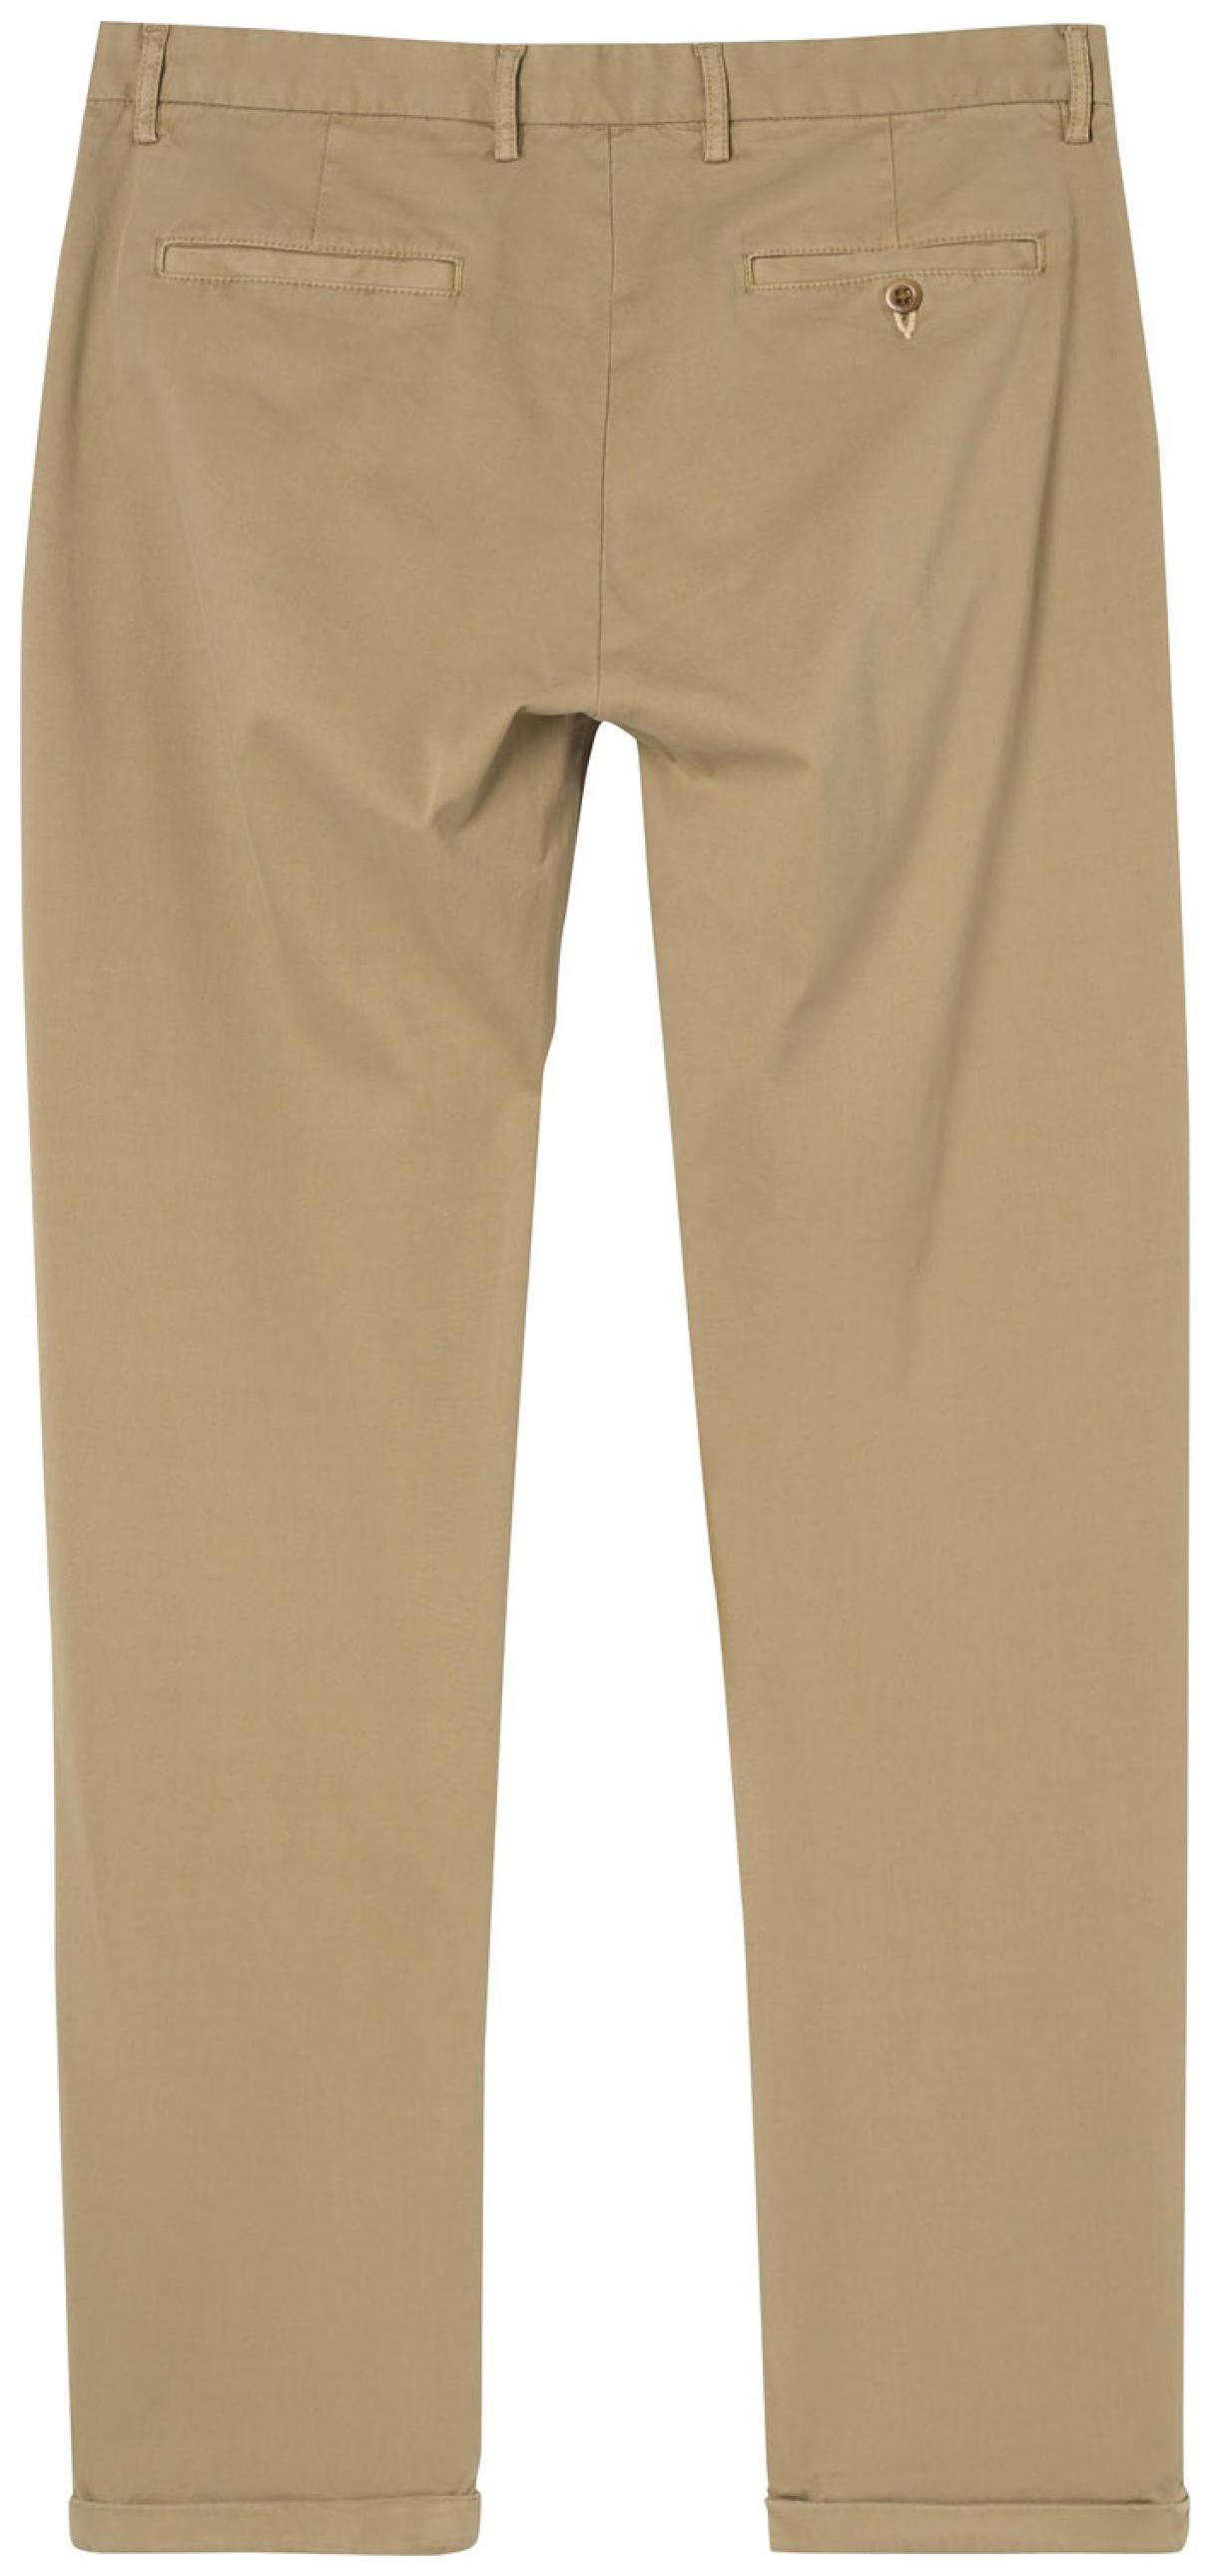 Gant Rugger Charcoal Slim Fit Wool Suit Trousers, $295 | MR PORTER |  Lookastic